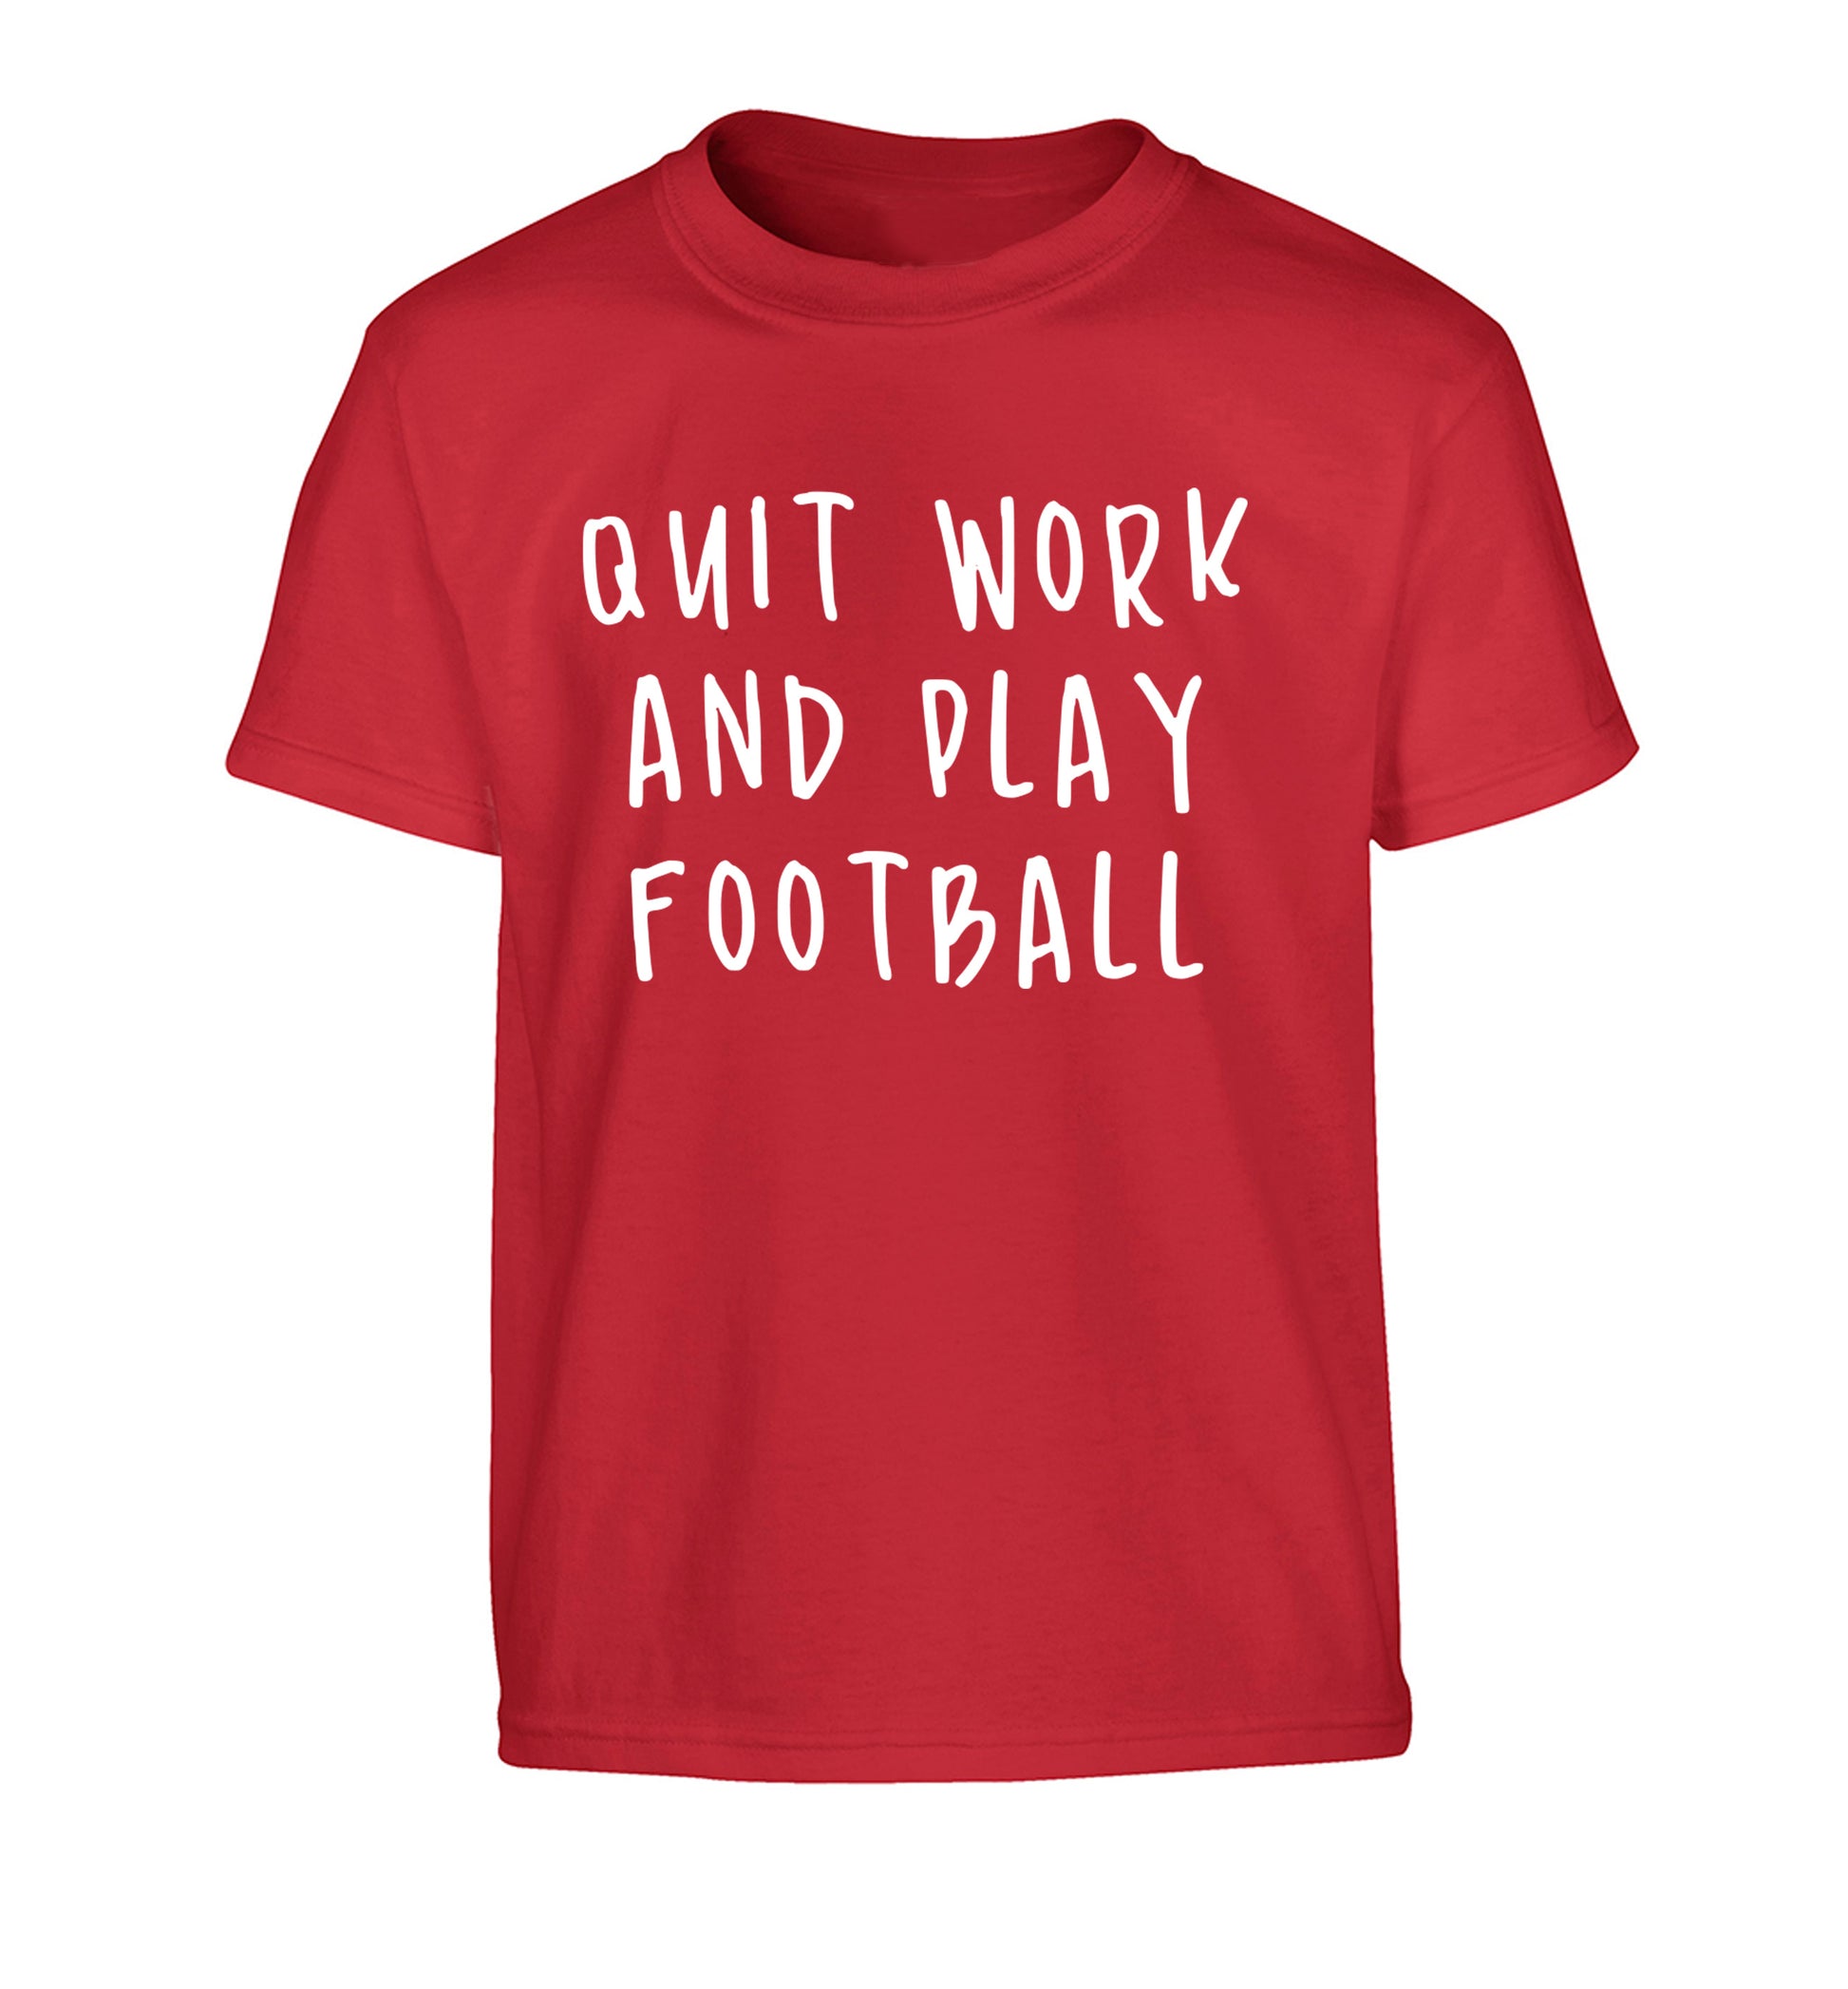 Quit work play football Children's red Tshirt 12-14 Years